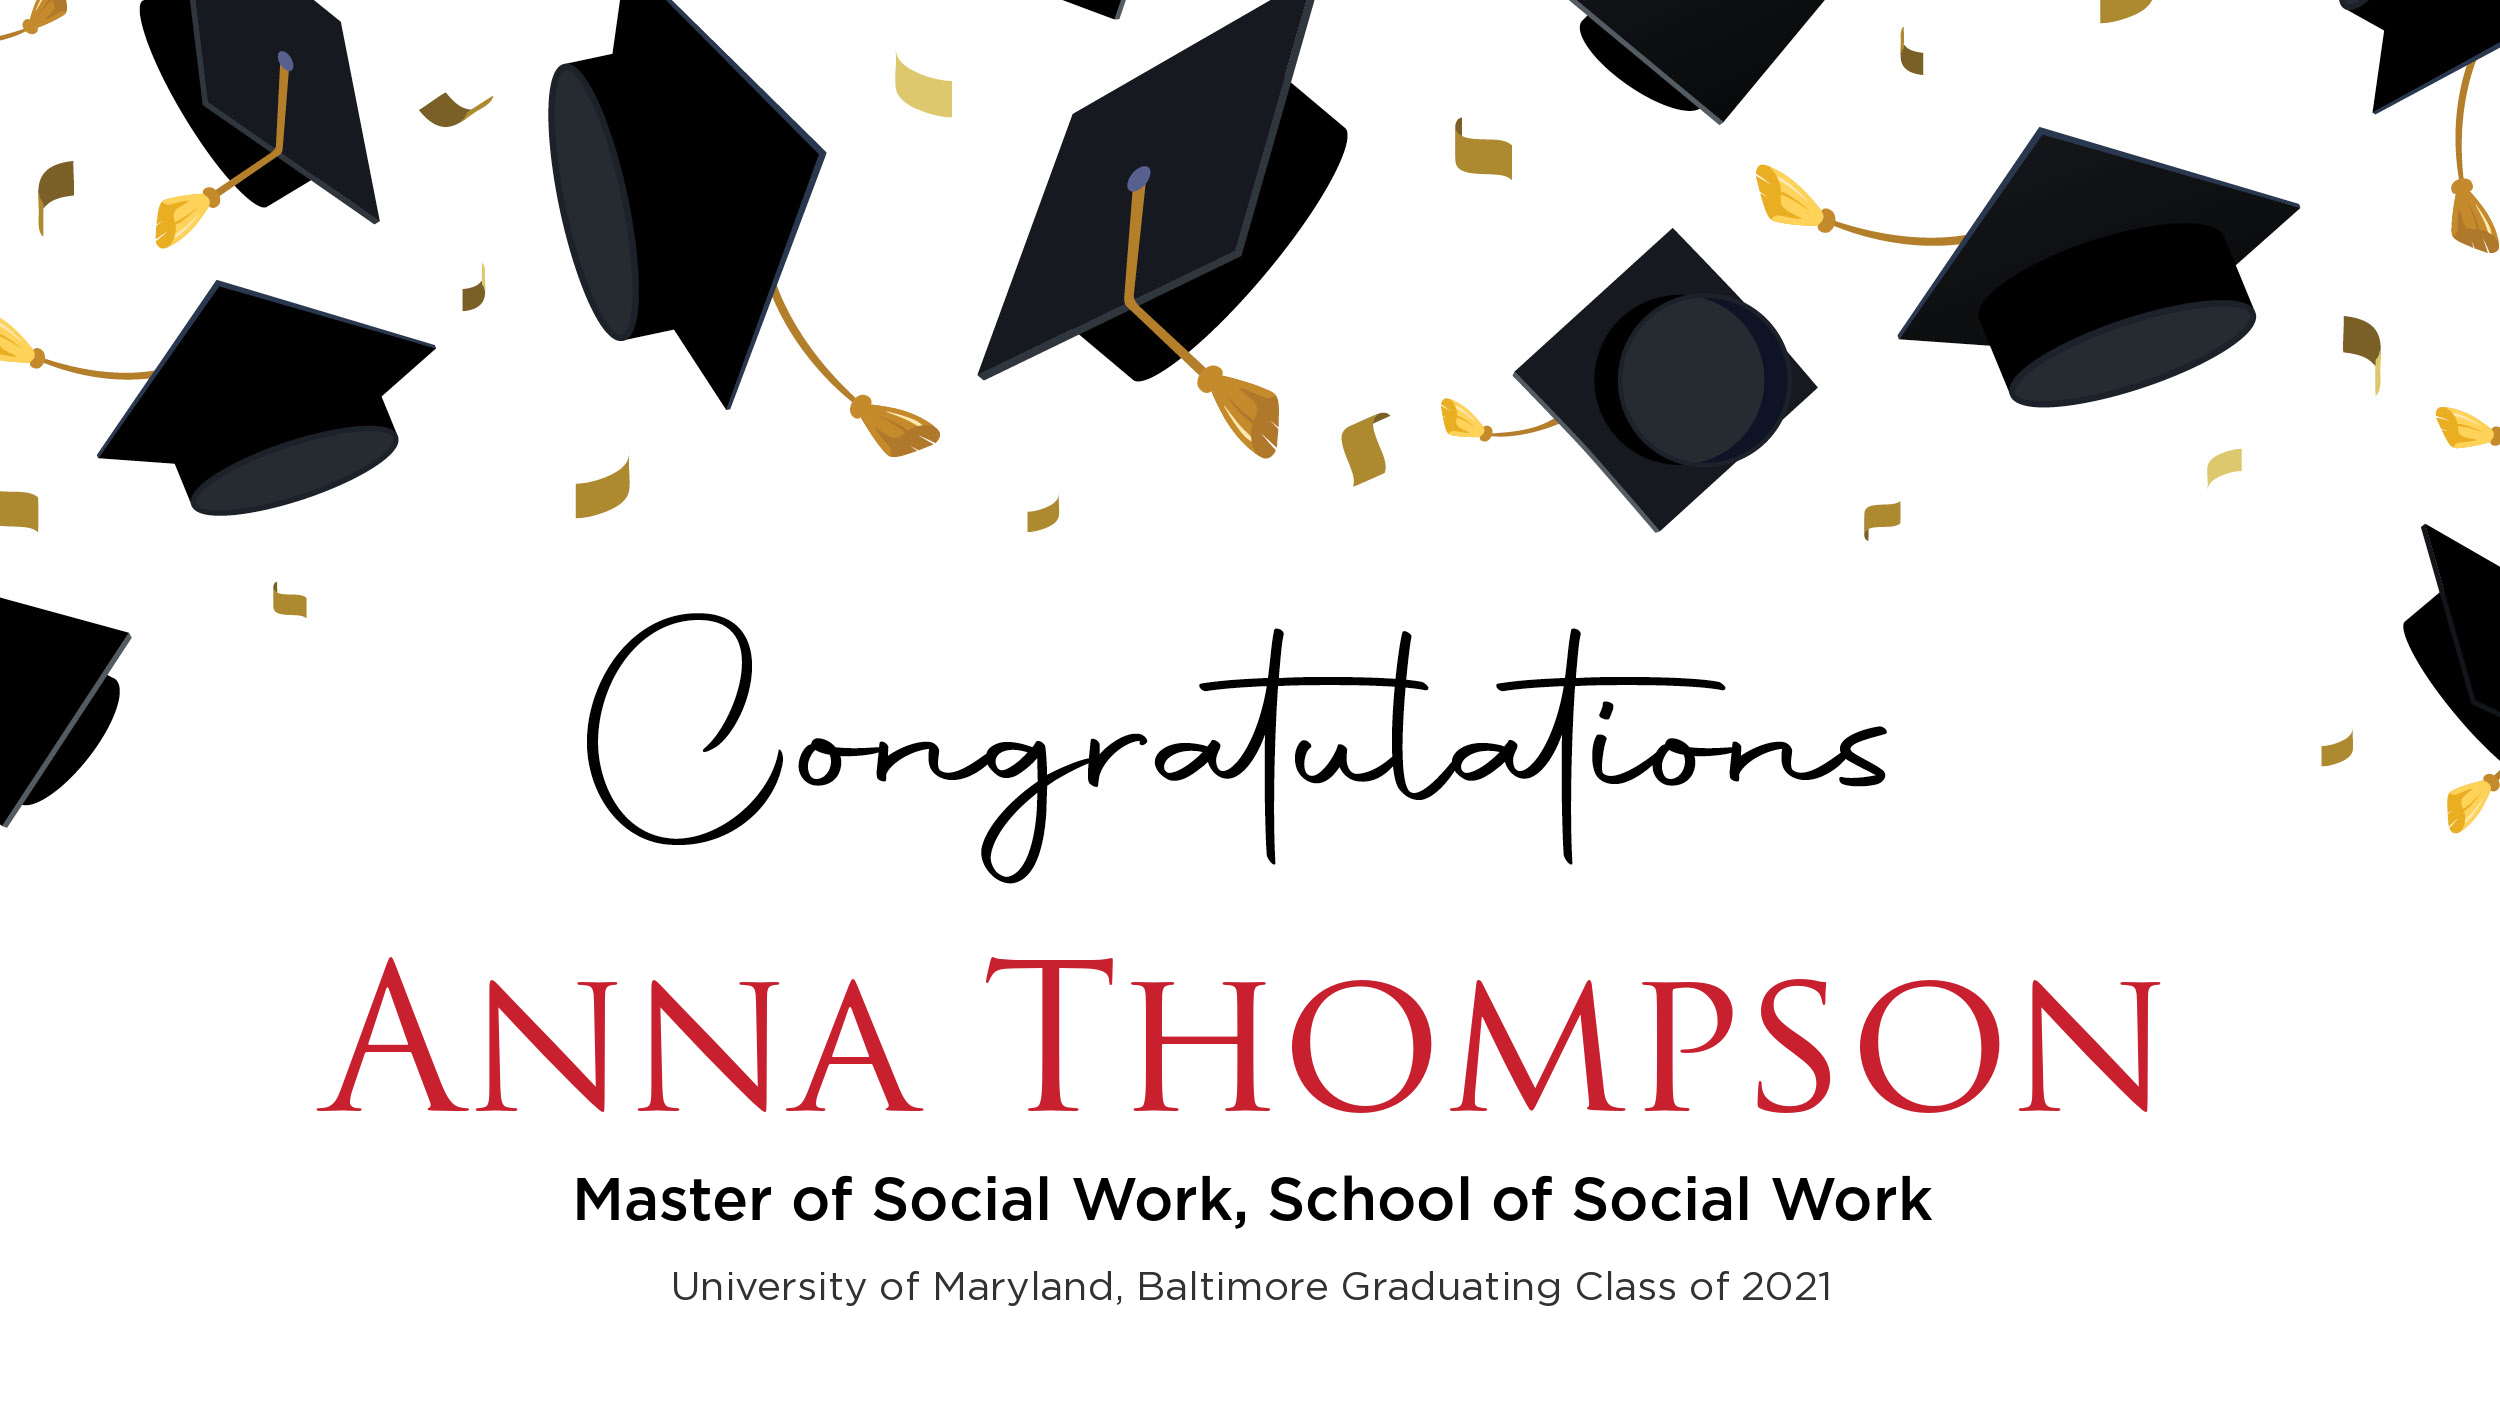 Congratulations Anna Thompson, Master of Social Work